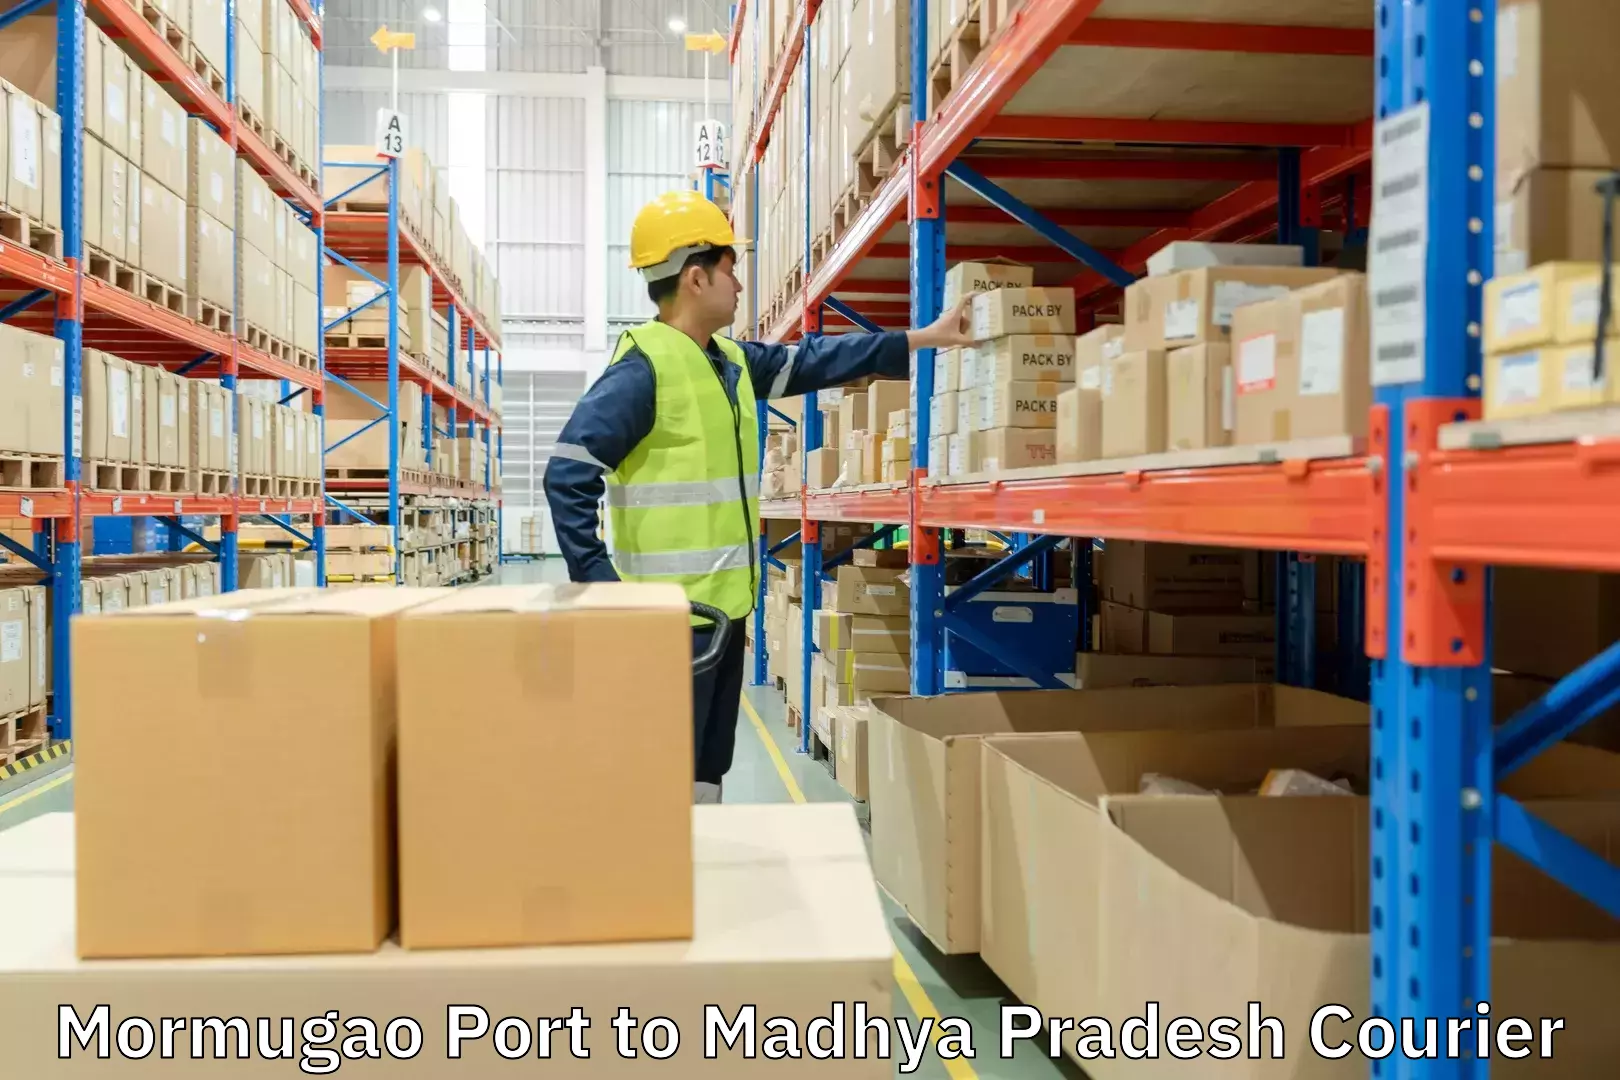 Express delivery solutions Mormugao Port to Madhya Pradesh